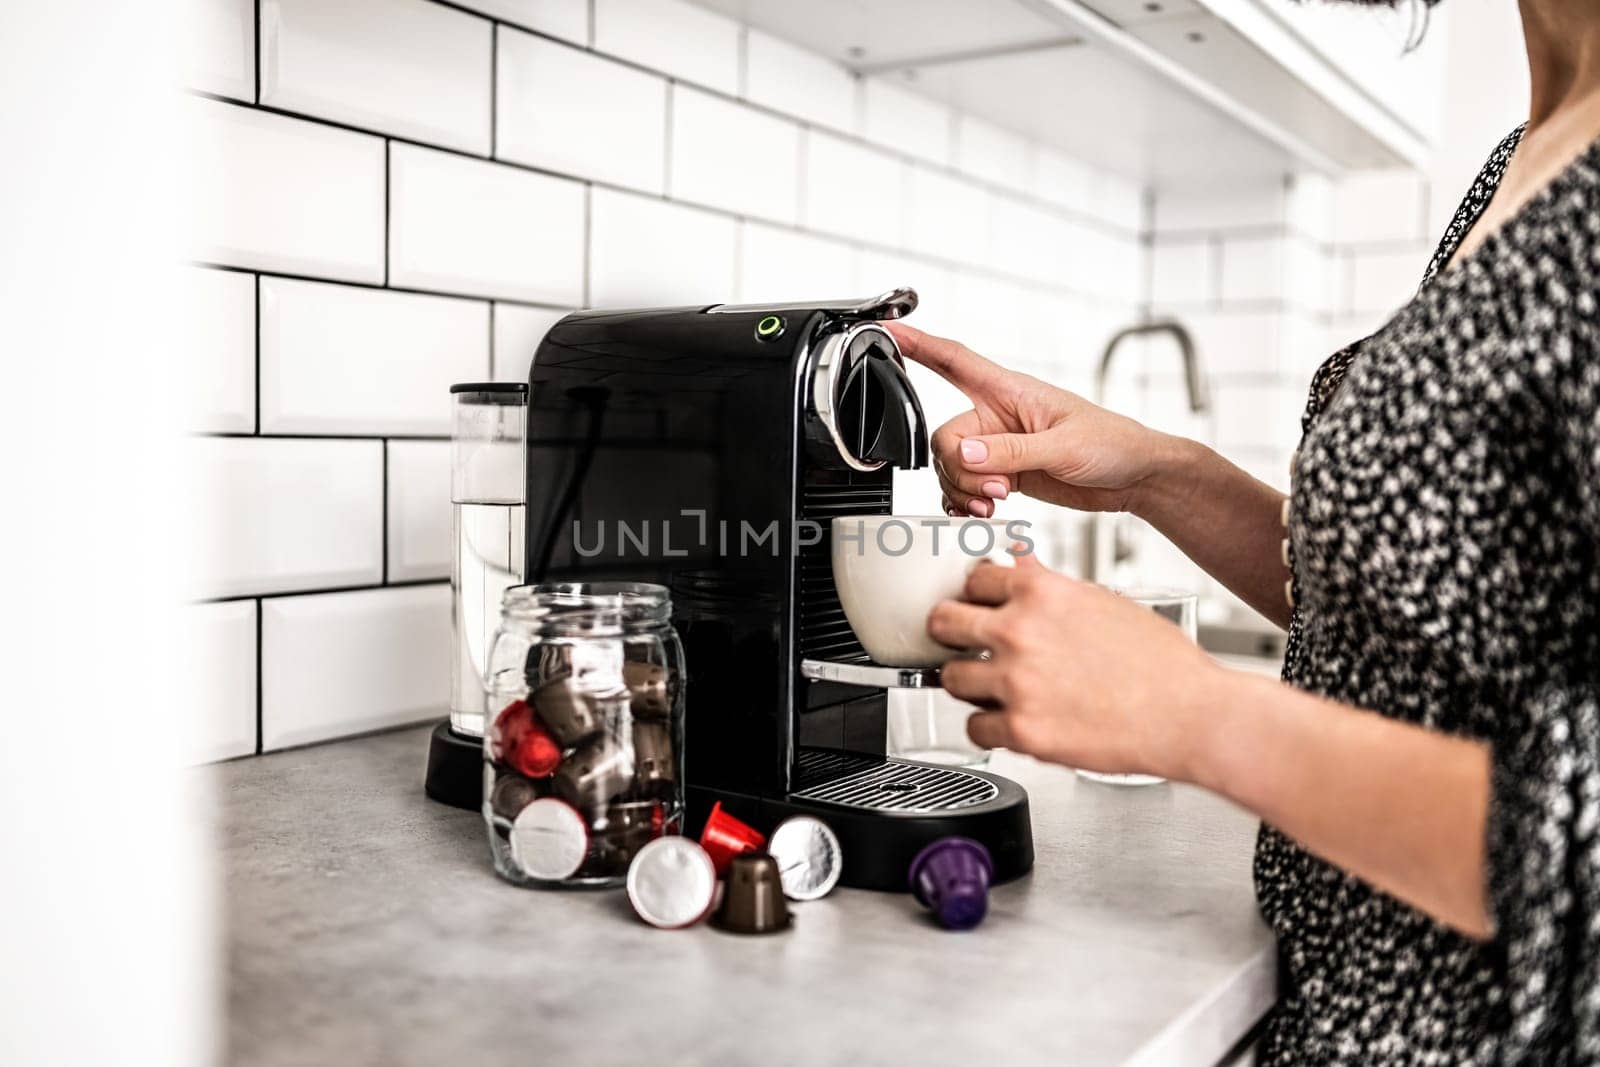 Capsule coffee machine at domestic kitchen by GekaSkr